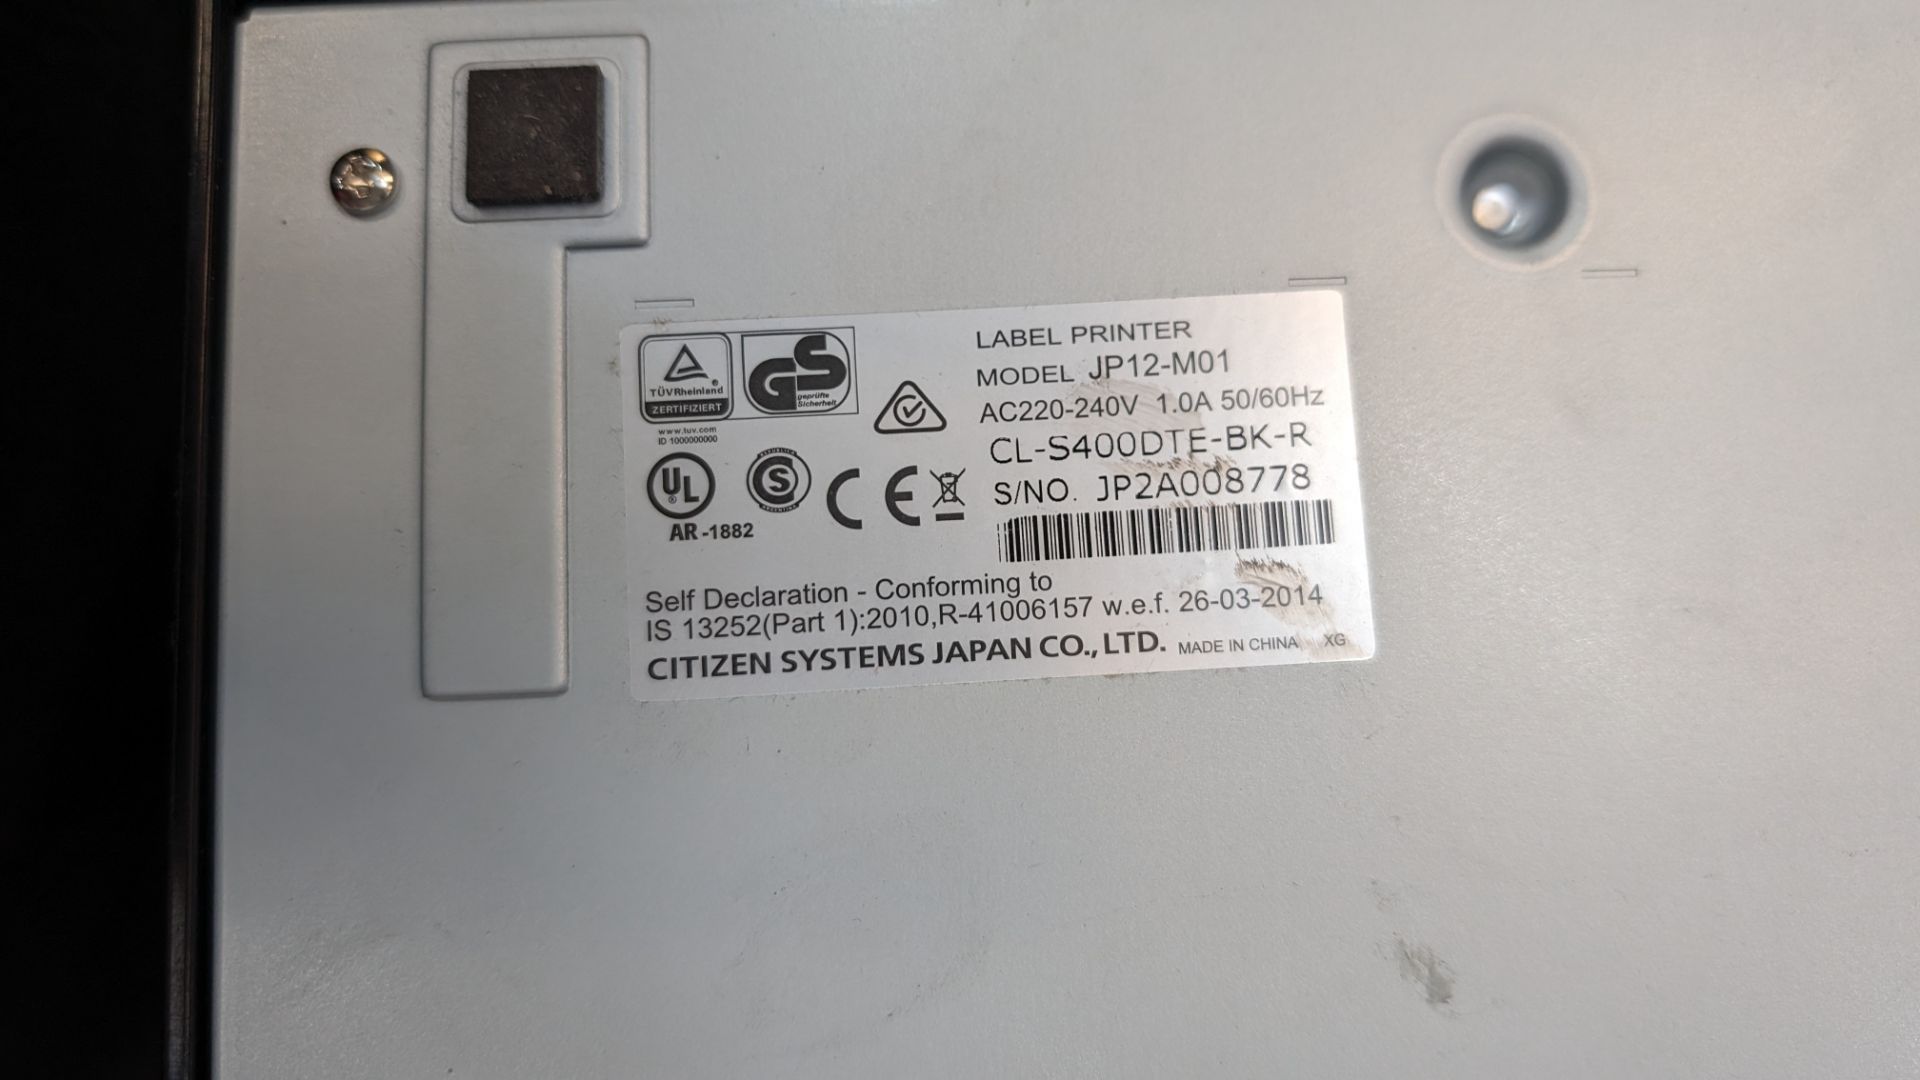 Citizen model CL-S400DT label printer - Image 6 of 7